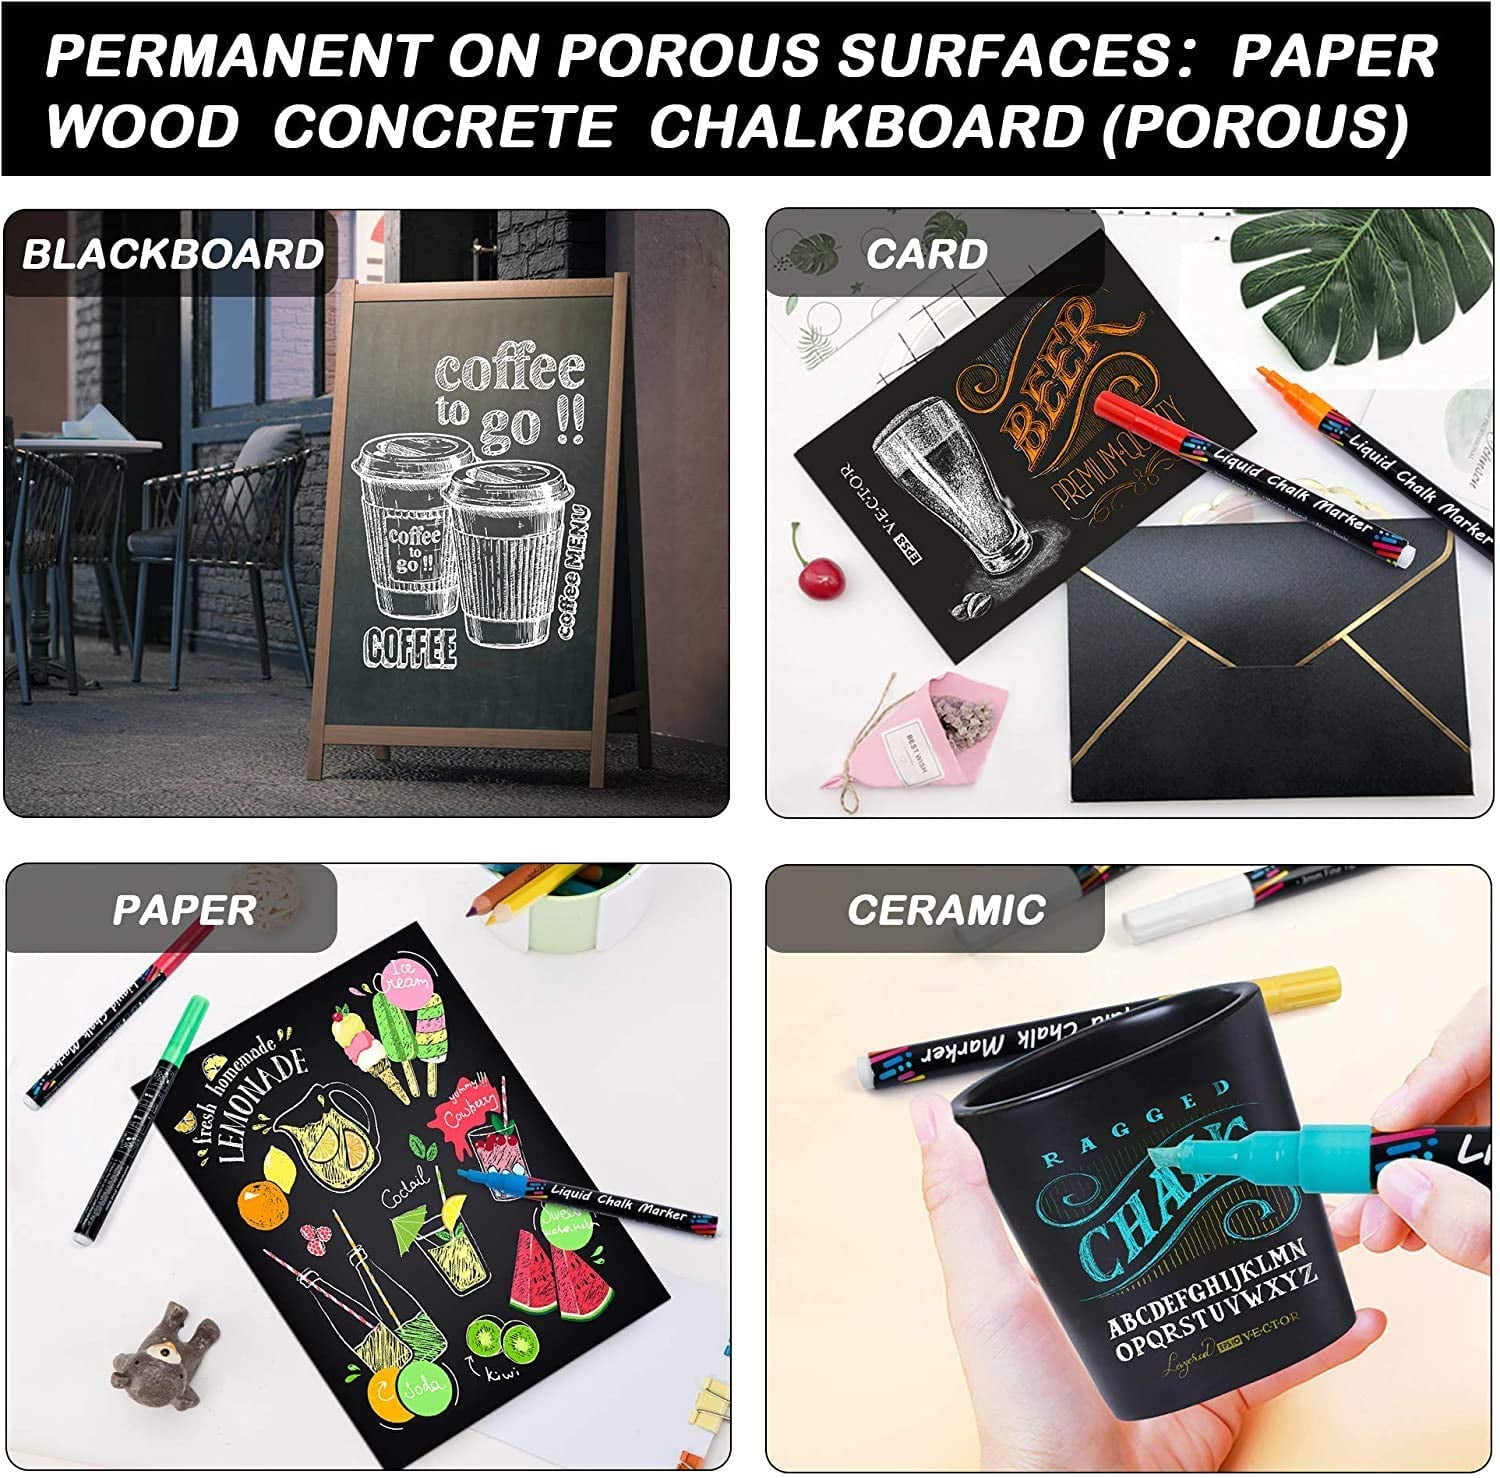 Chalkola 10 Fine Tip Liquid Chalk Markers for Chalkboard Signs, Blackboard,  Window, Labels, Bistro, Glass, Car (10 Pack 3mm) - Wet Wipe Erasable Ink